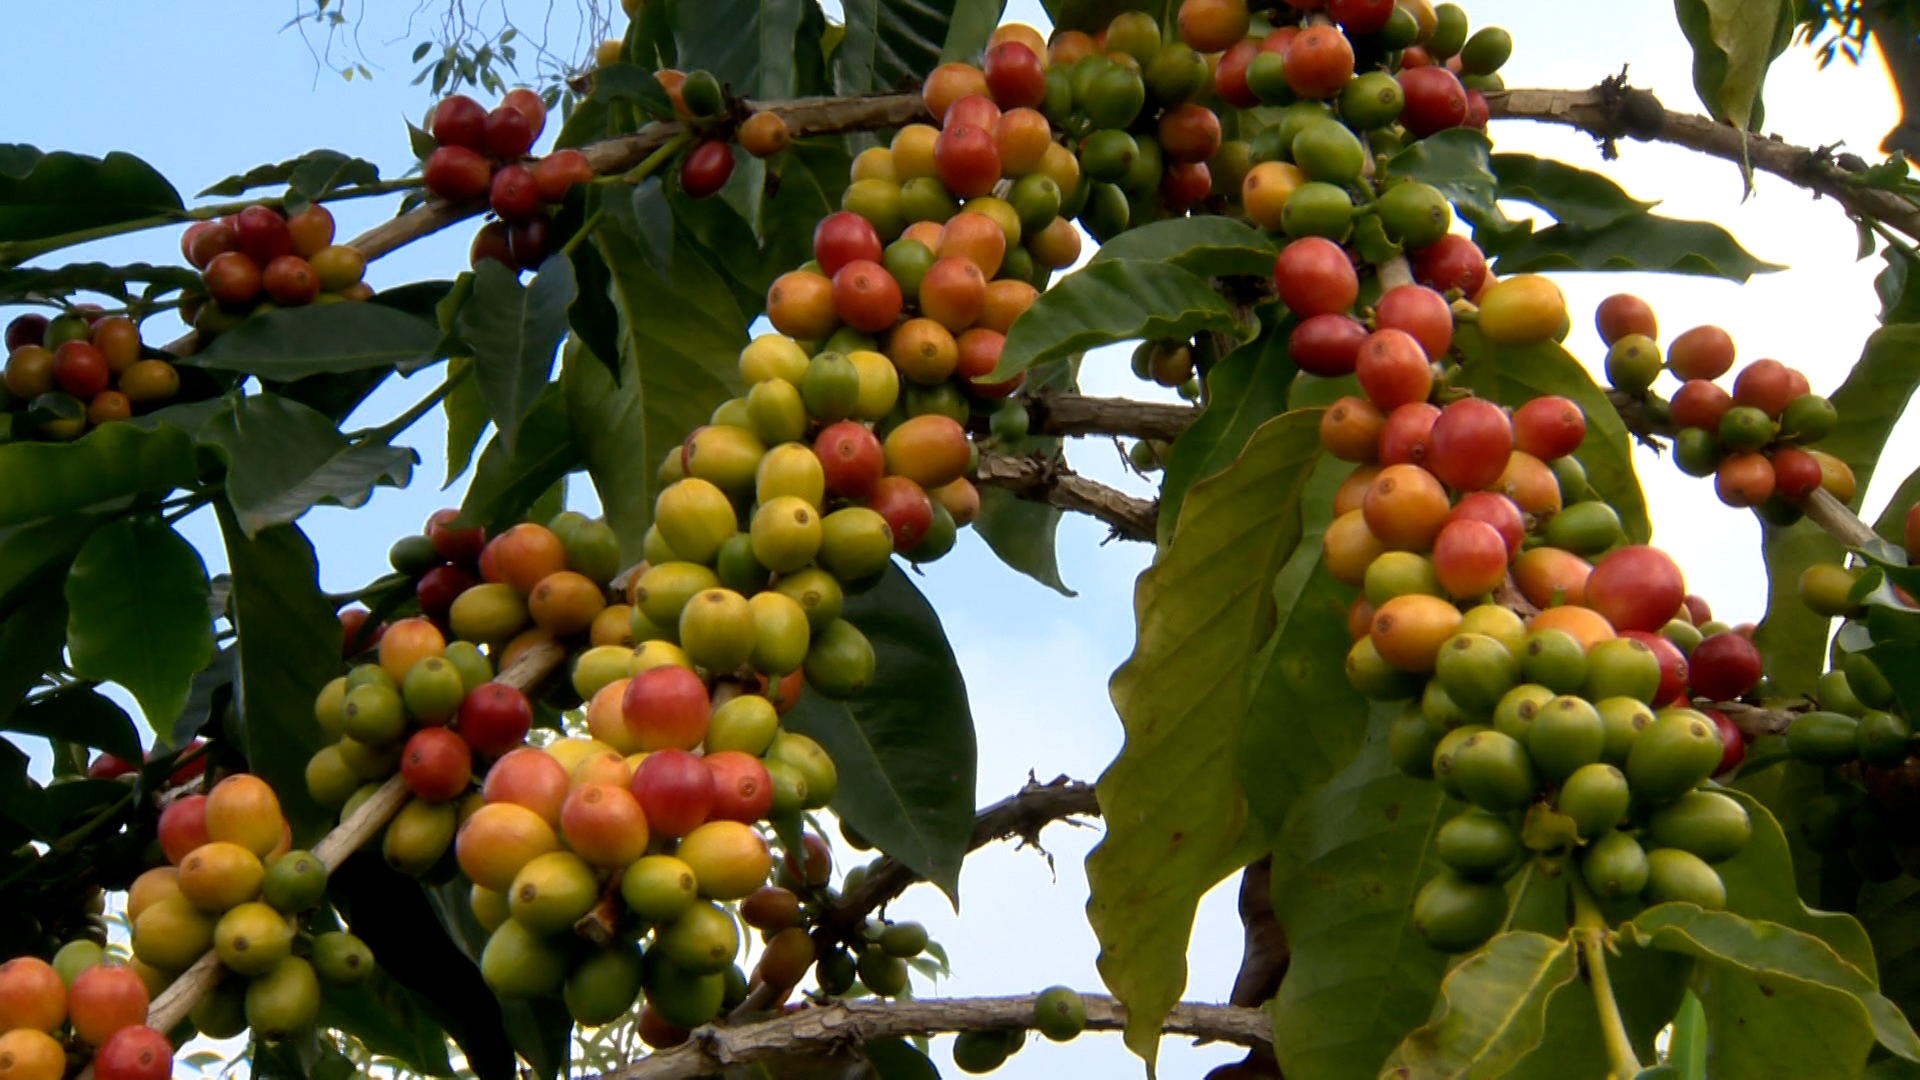 The Big Business of Coffee in Hawaiʻi